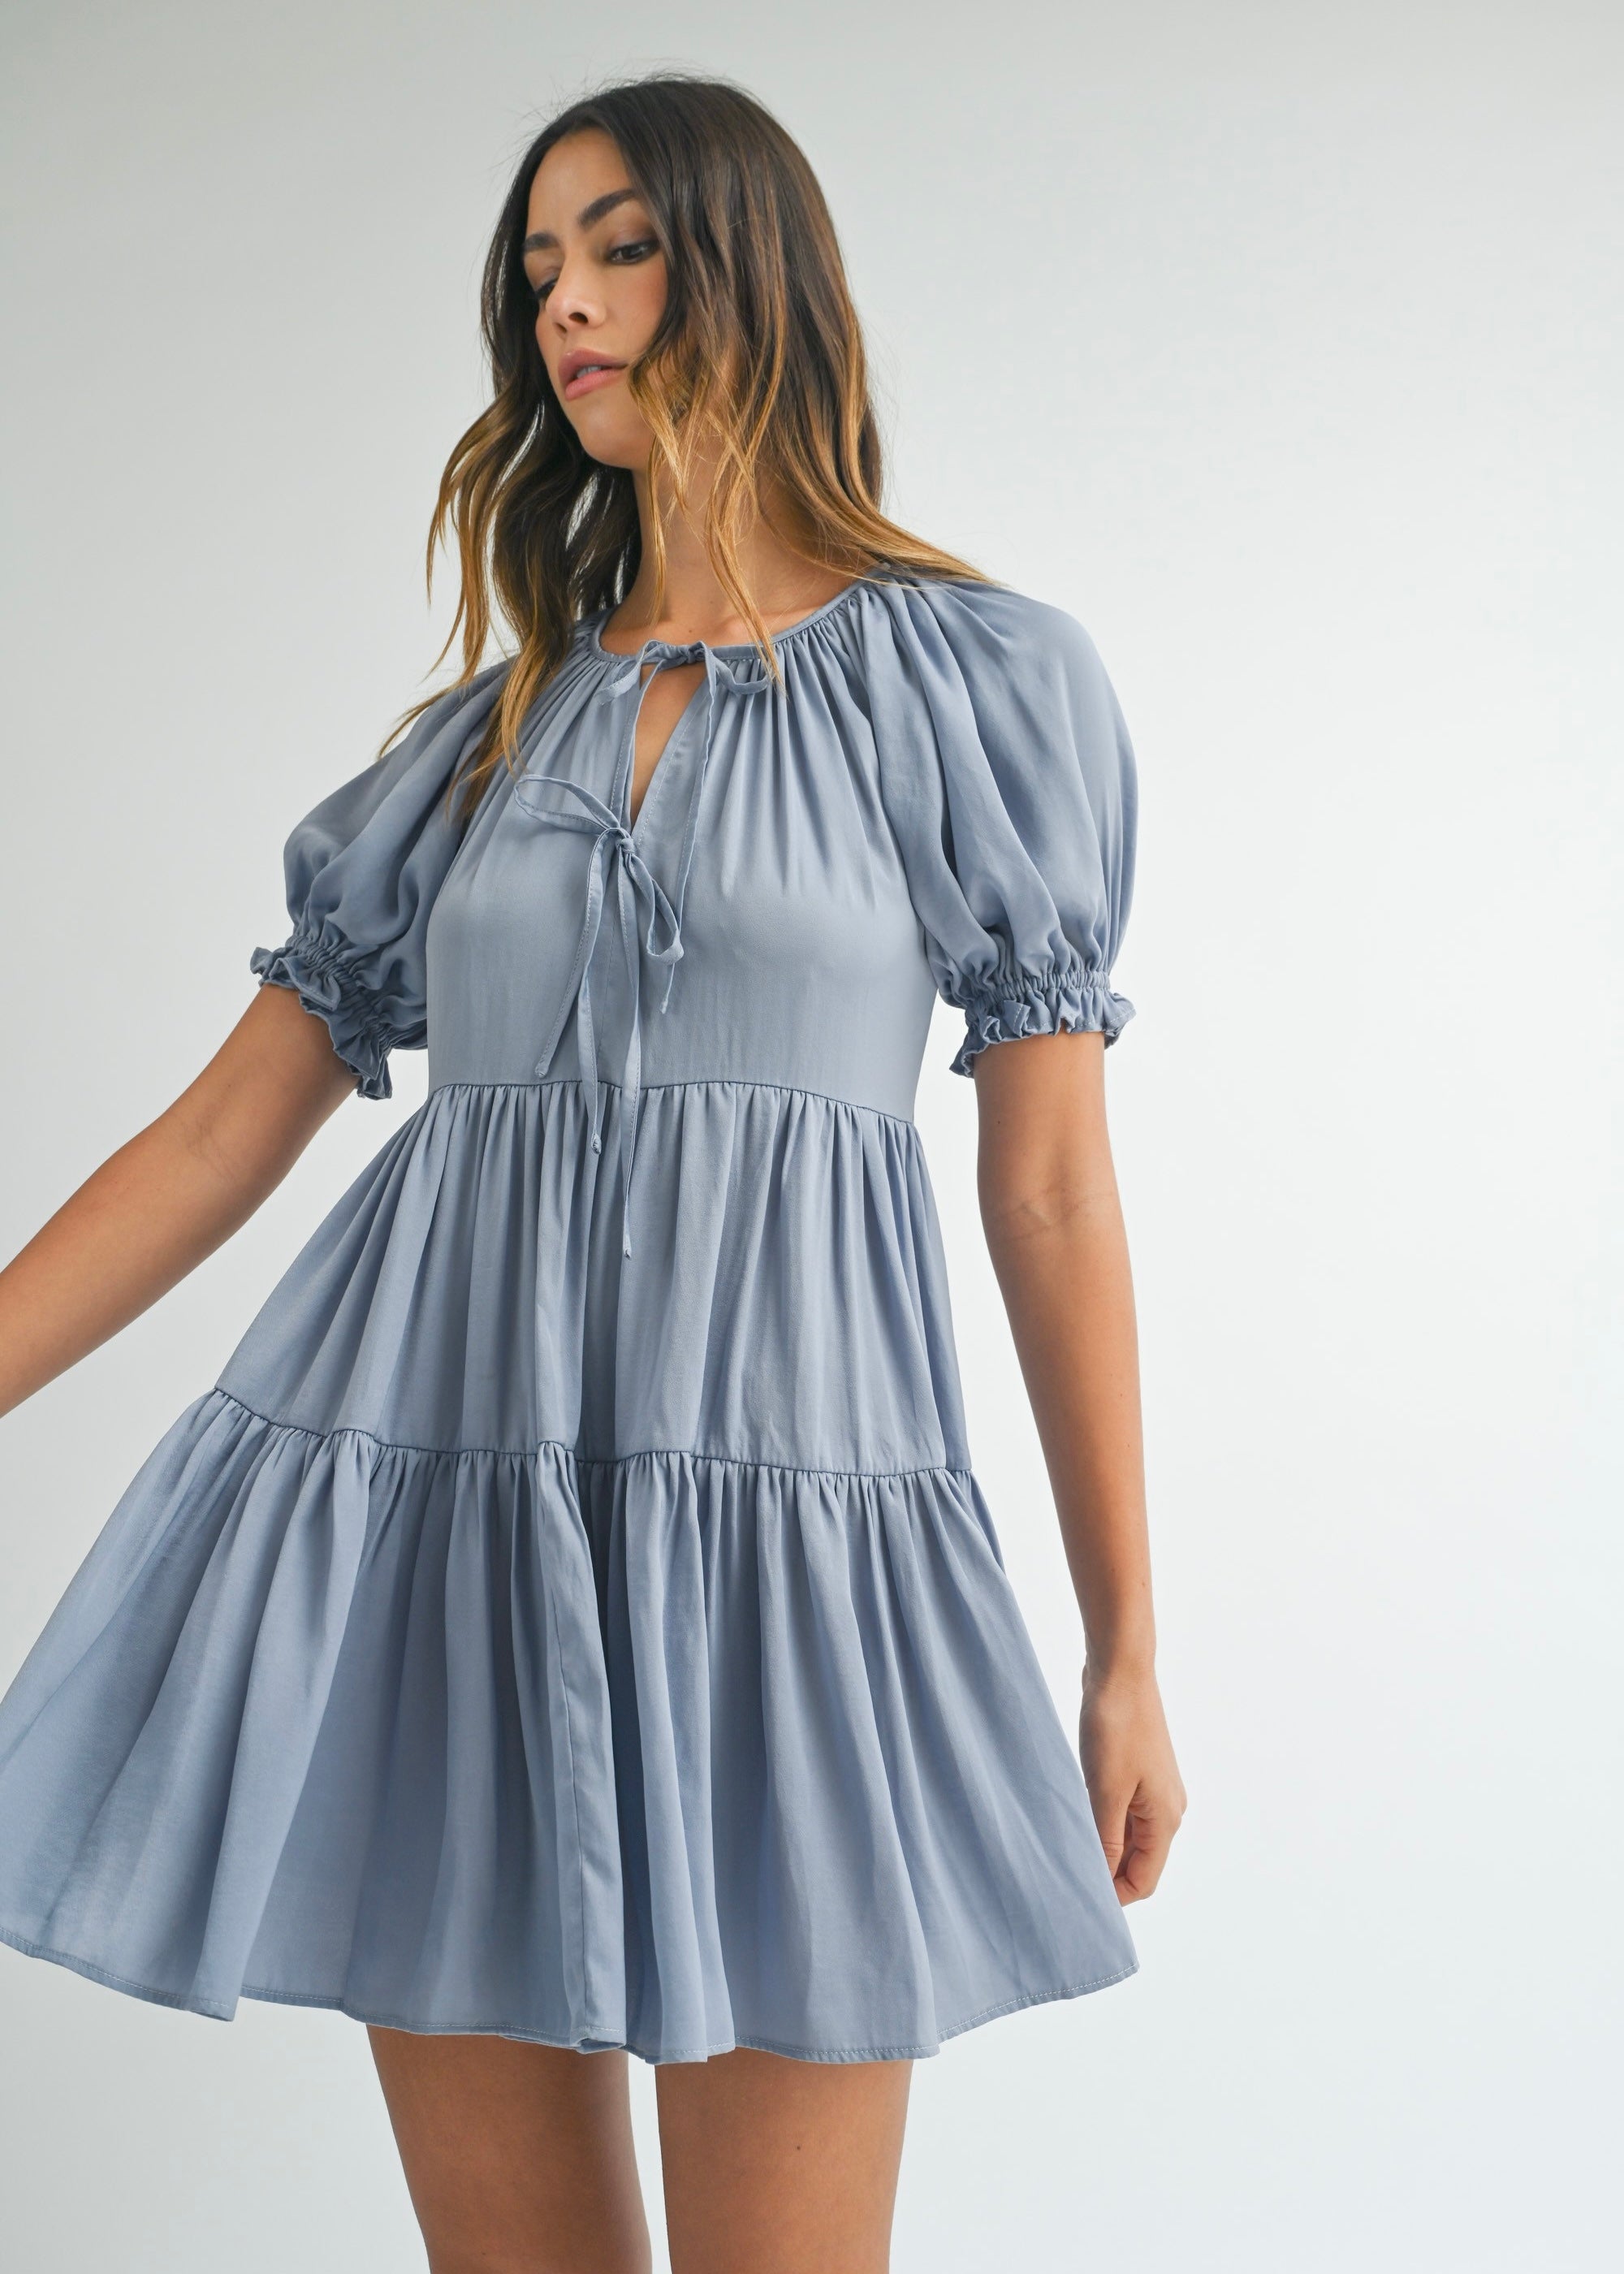 Lucia Dusty Blue Short Dress